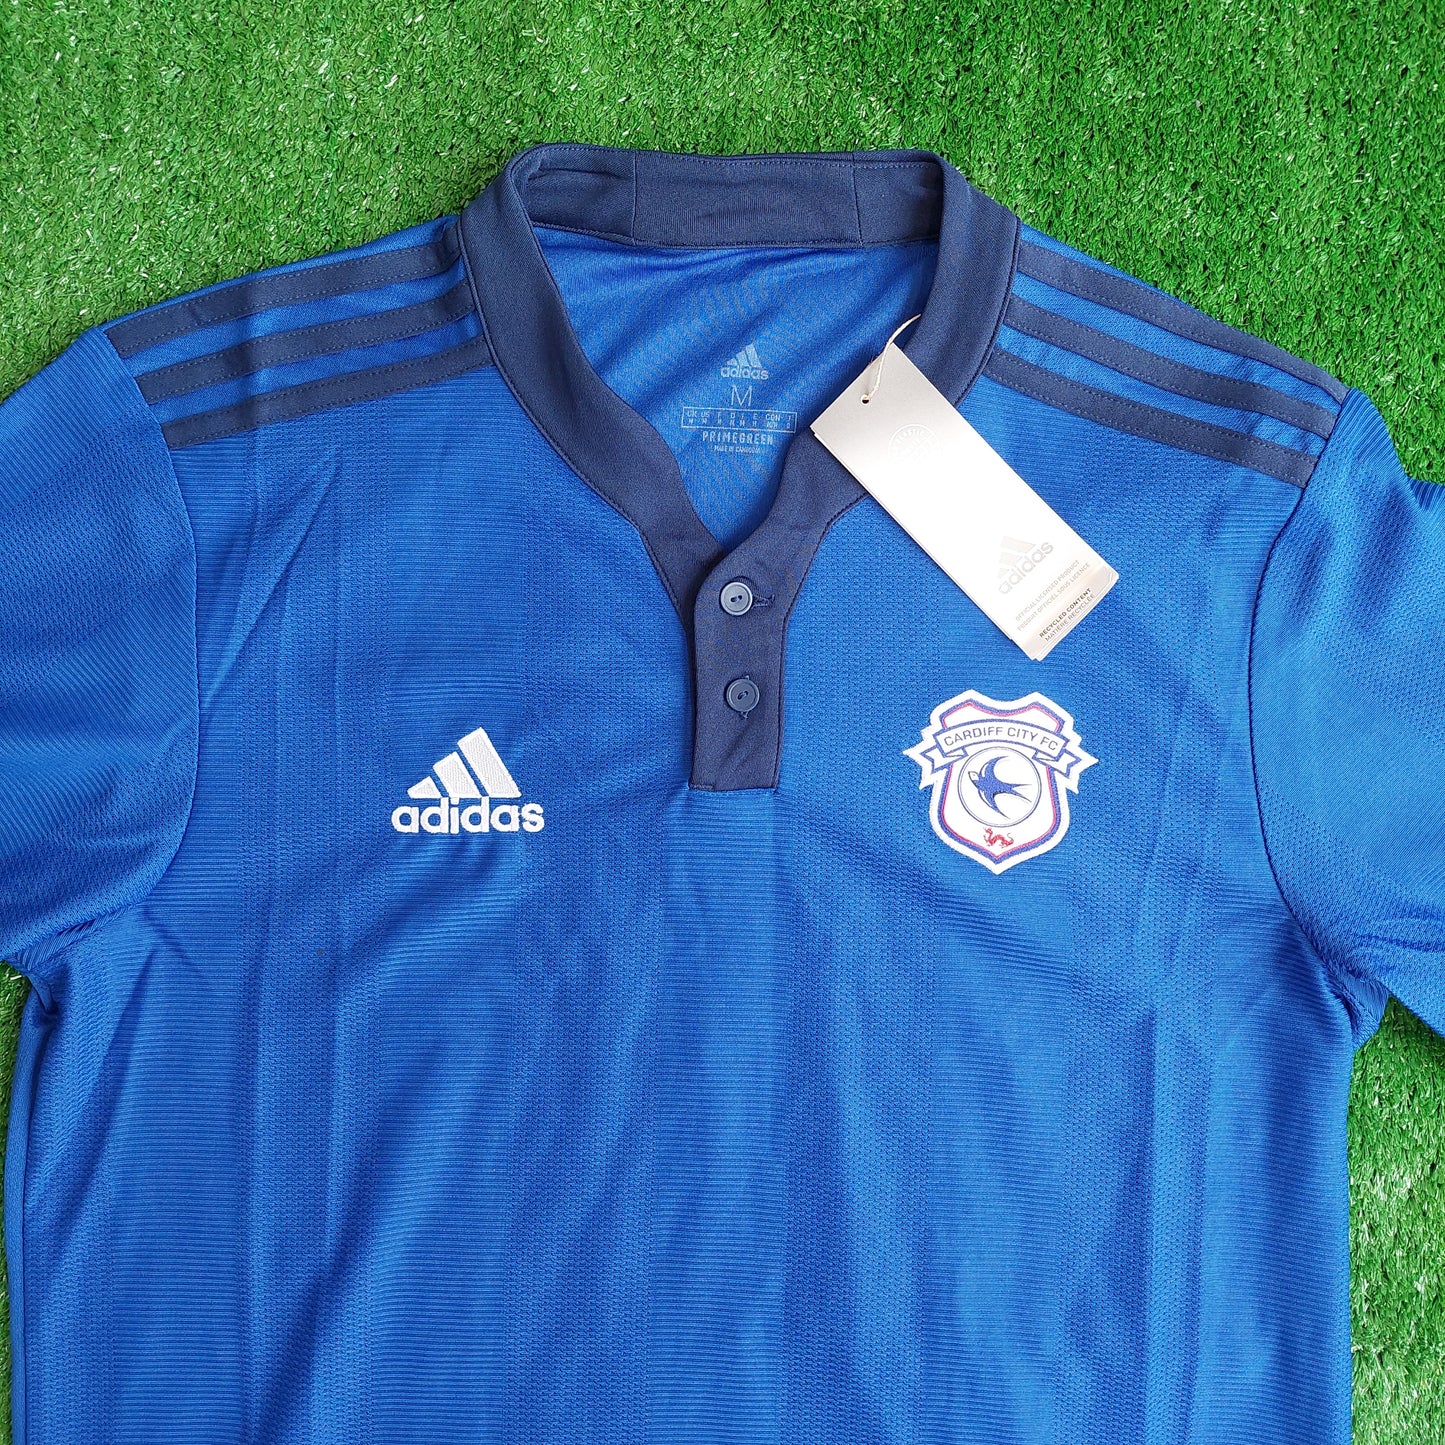 Cardiff City 2021/22 *Sponsor-less* Home Shirt (BNWT) - Size M